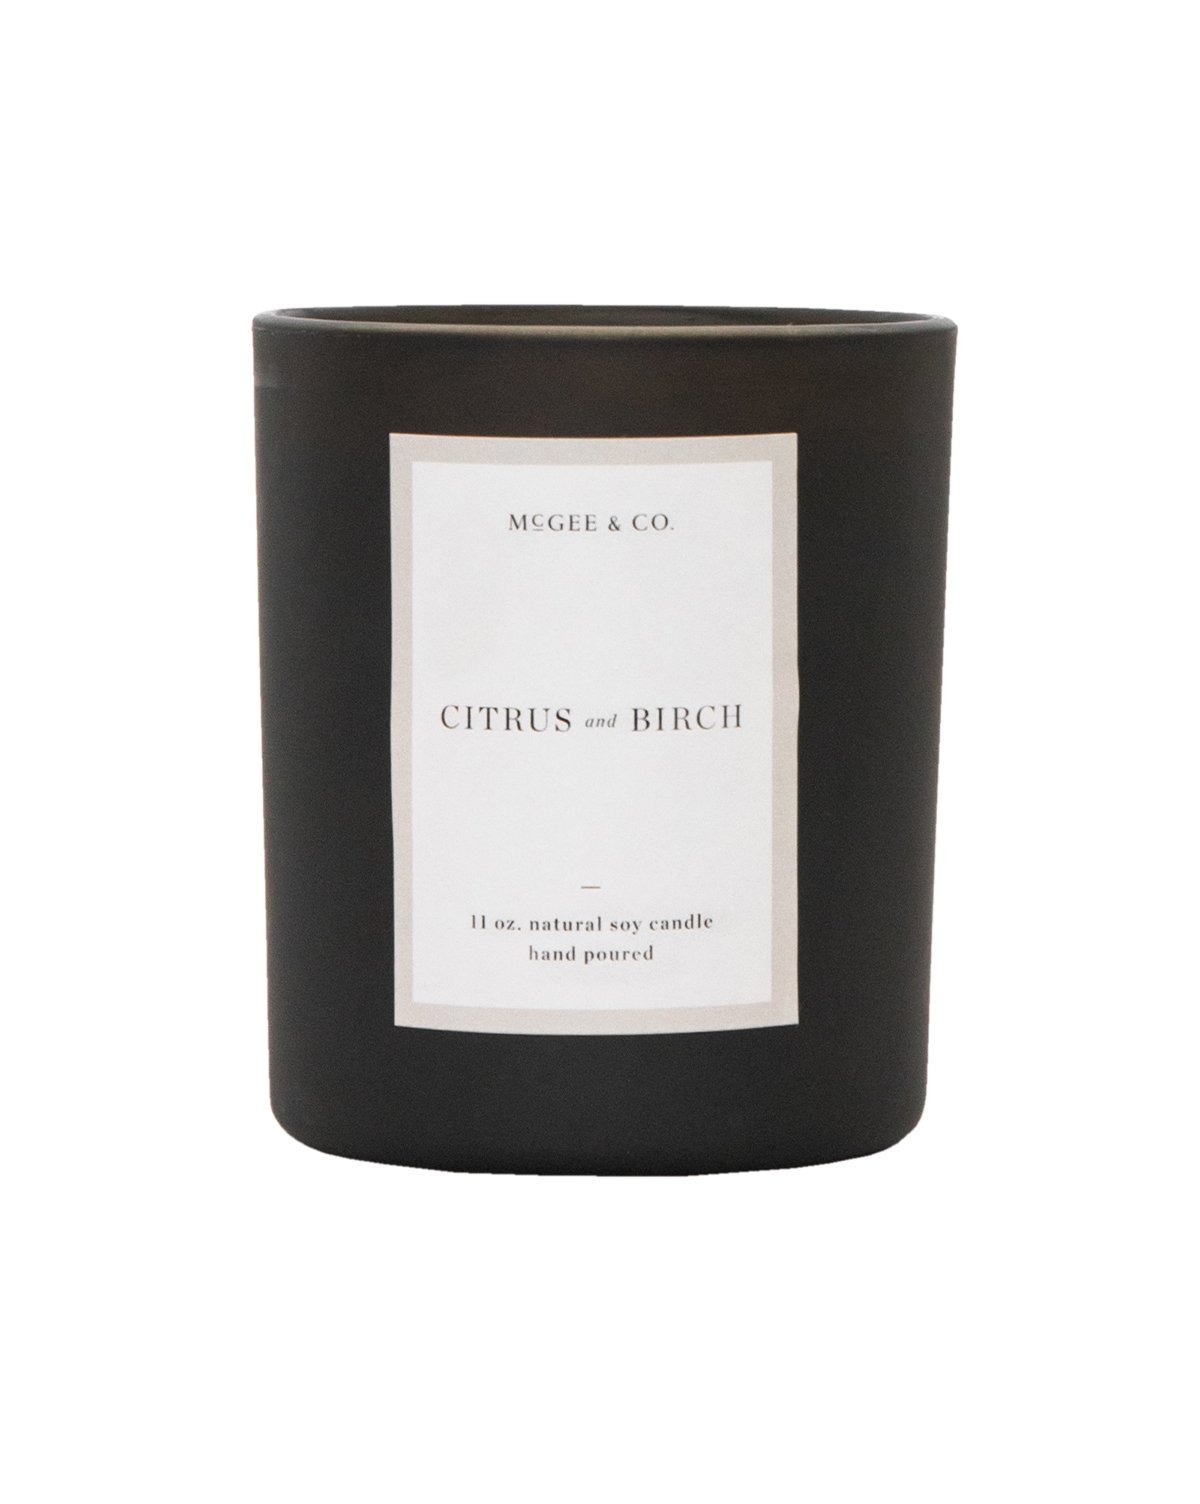 Citrus & Birch Candle - Image 0